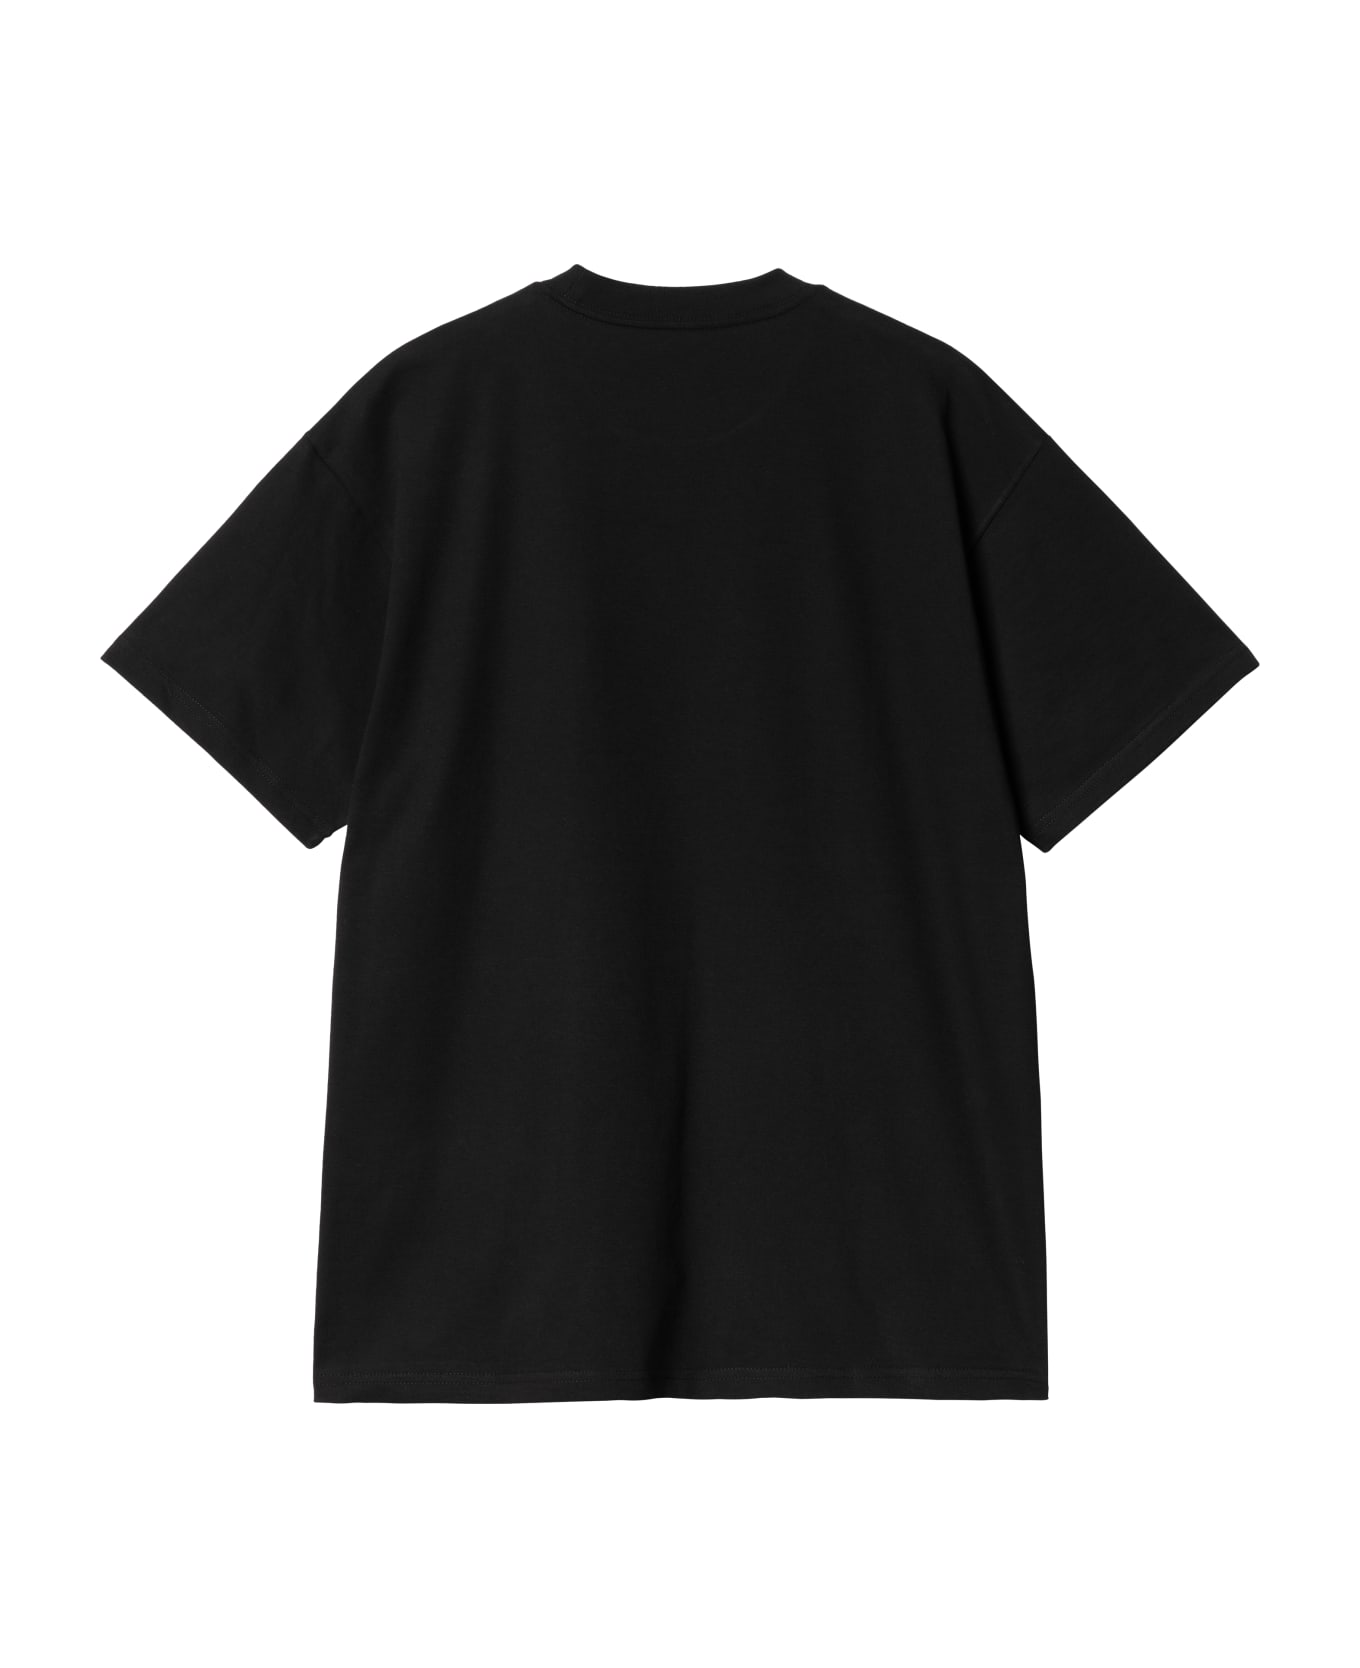 Carhartt S S Gummy T-shirt - Xx Black